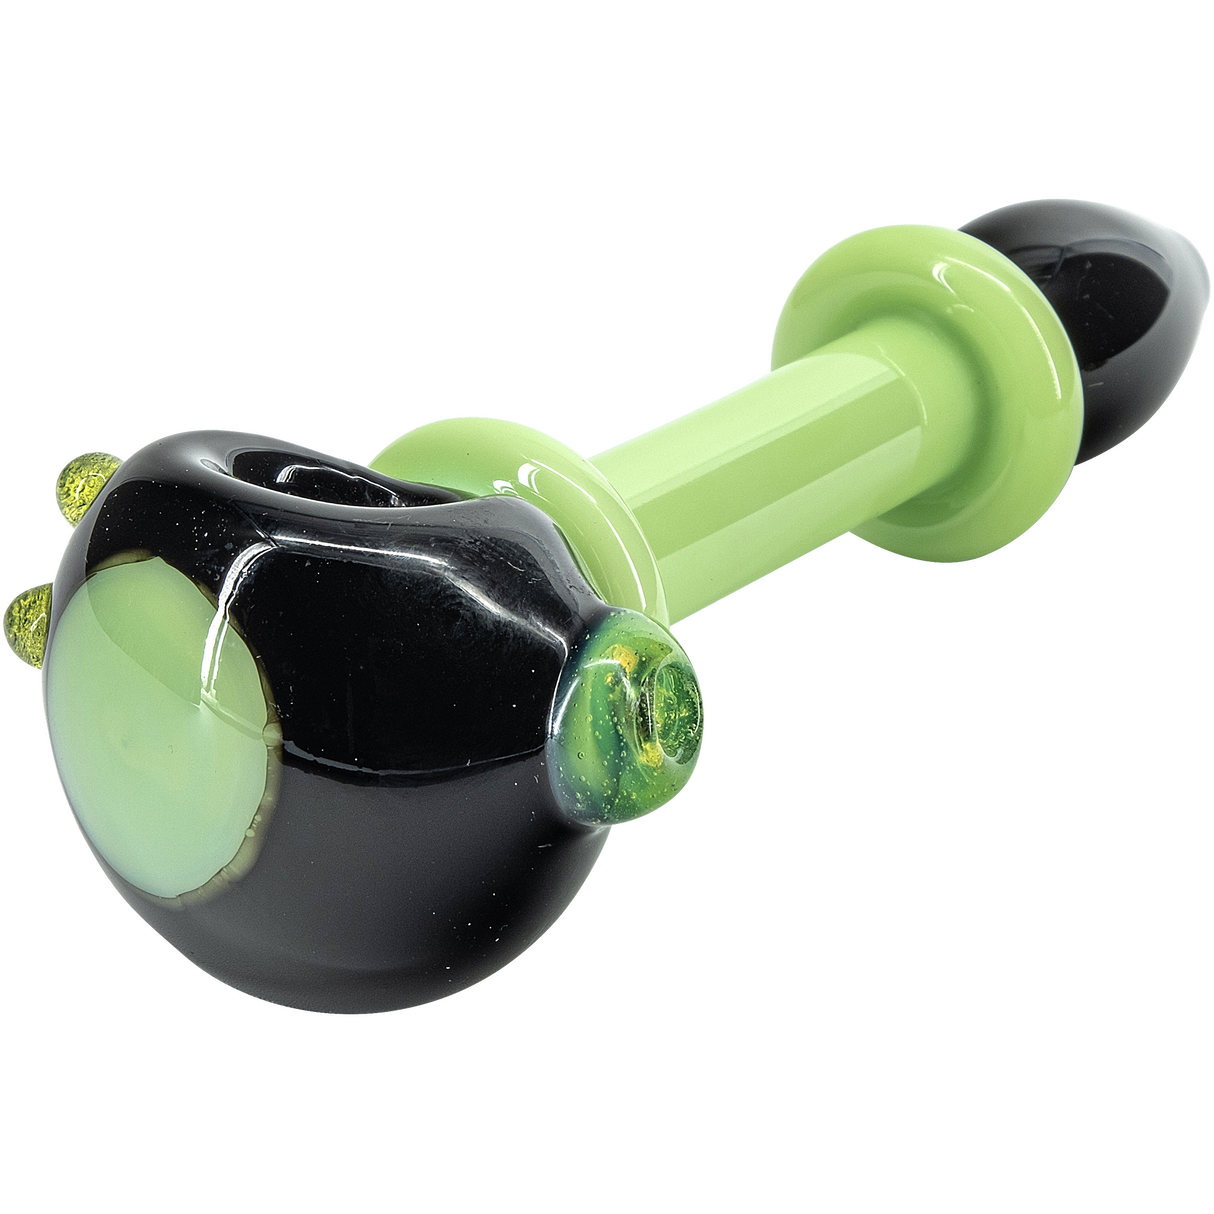 LA Pipes "Ray Gun" Green Slime Glass Spoon